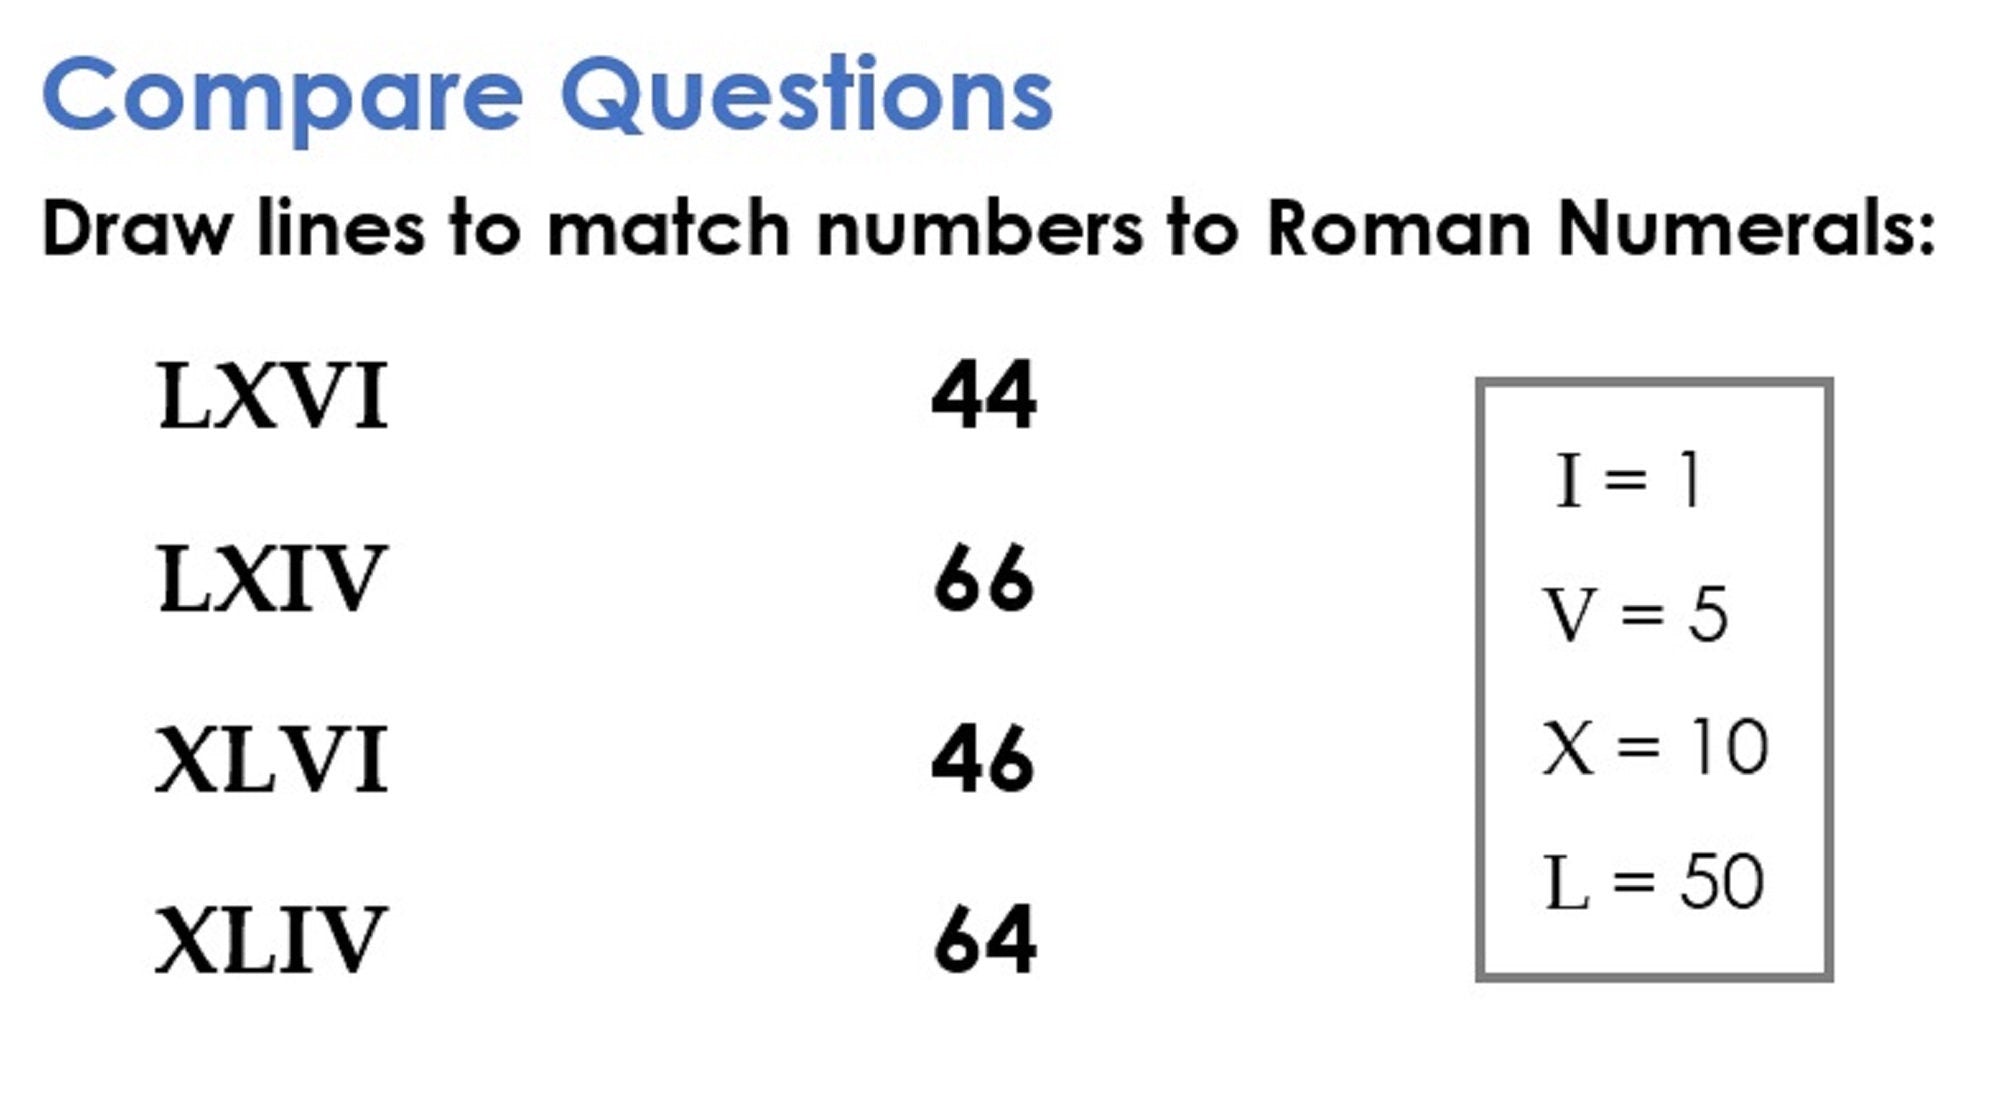 Roman Numerals reasoning